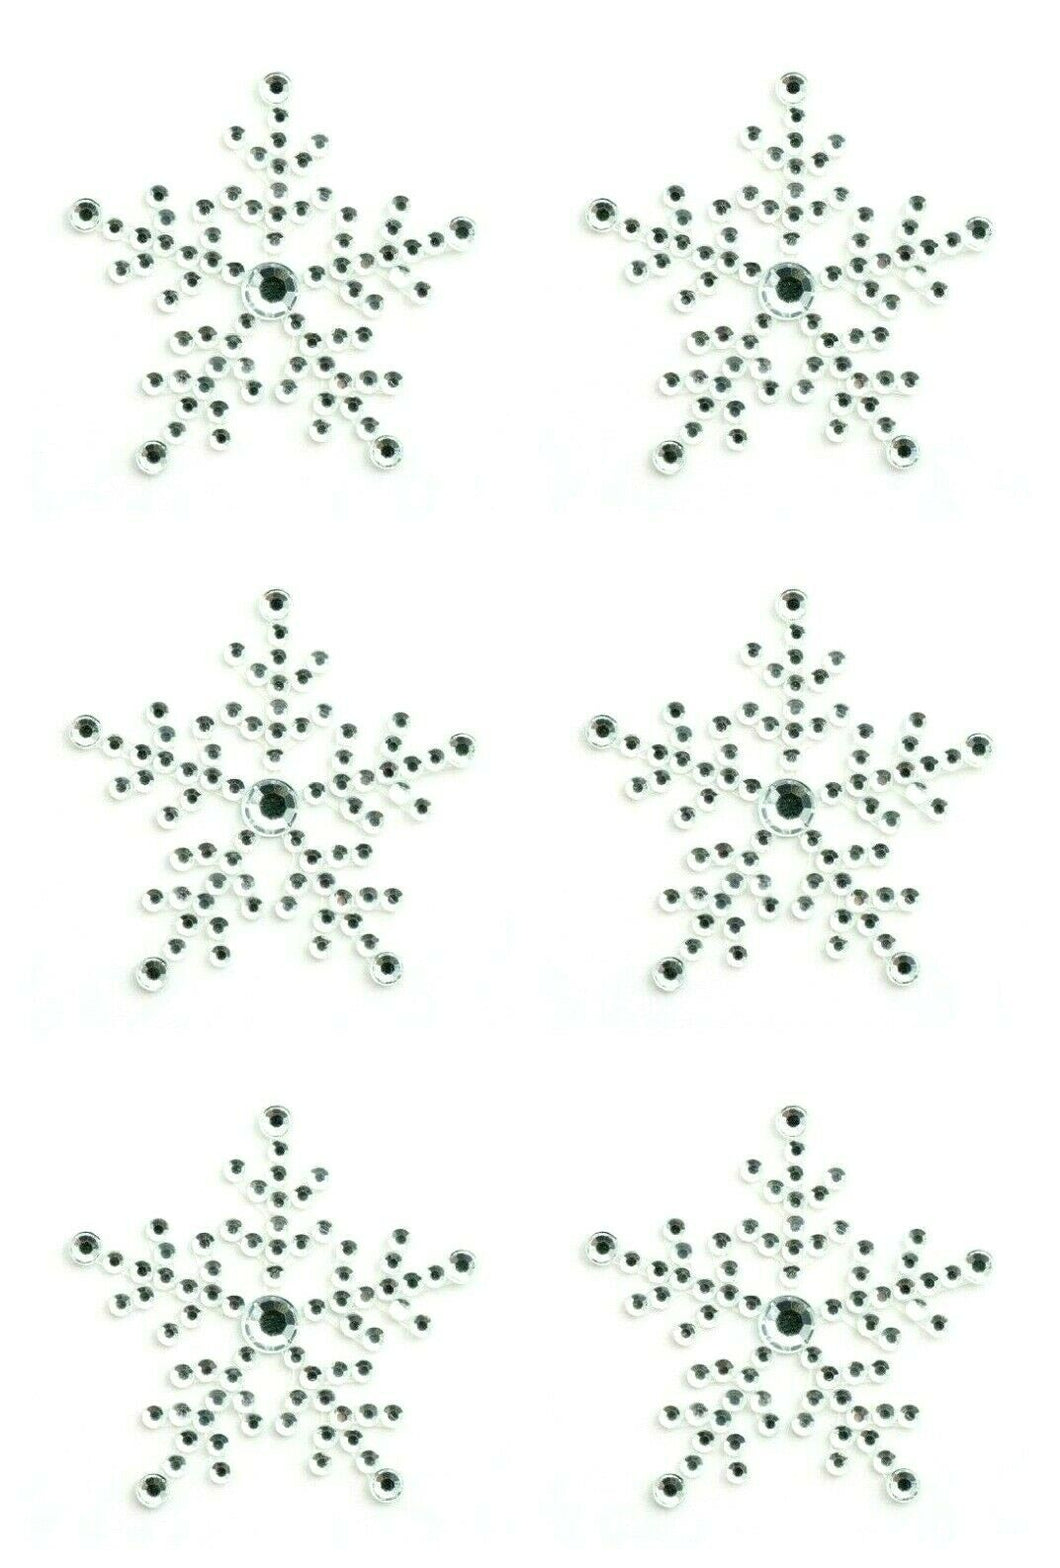 thecraftshop.net Italian Options - Rhinestone Christmas Snowflake Stickers x 6